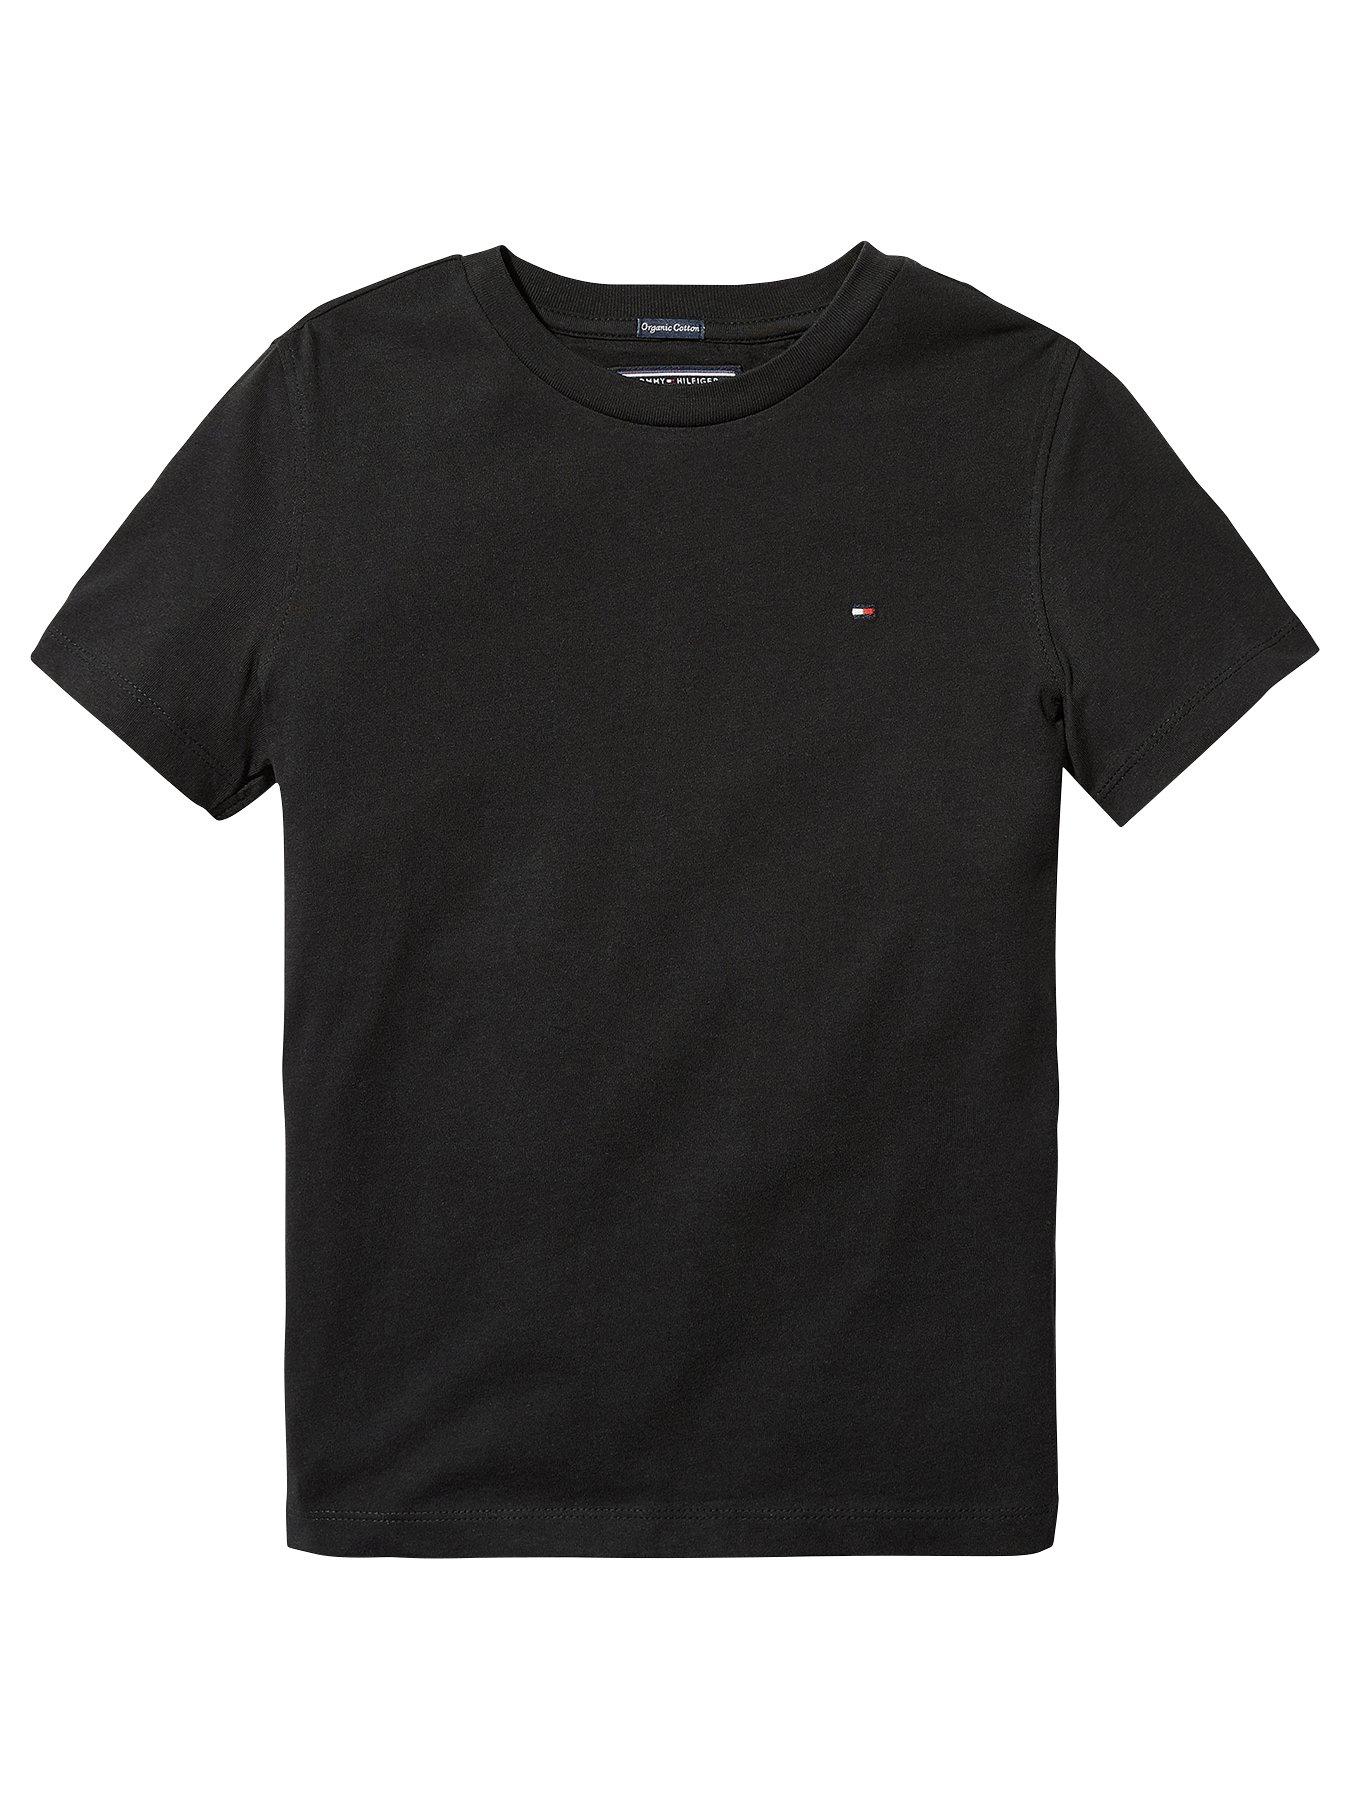 Tommy Hilfiger Boys Short Sleeve Essential Flag T-Shirt - Black, Black, Size 8 Years